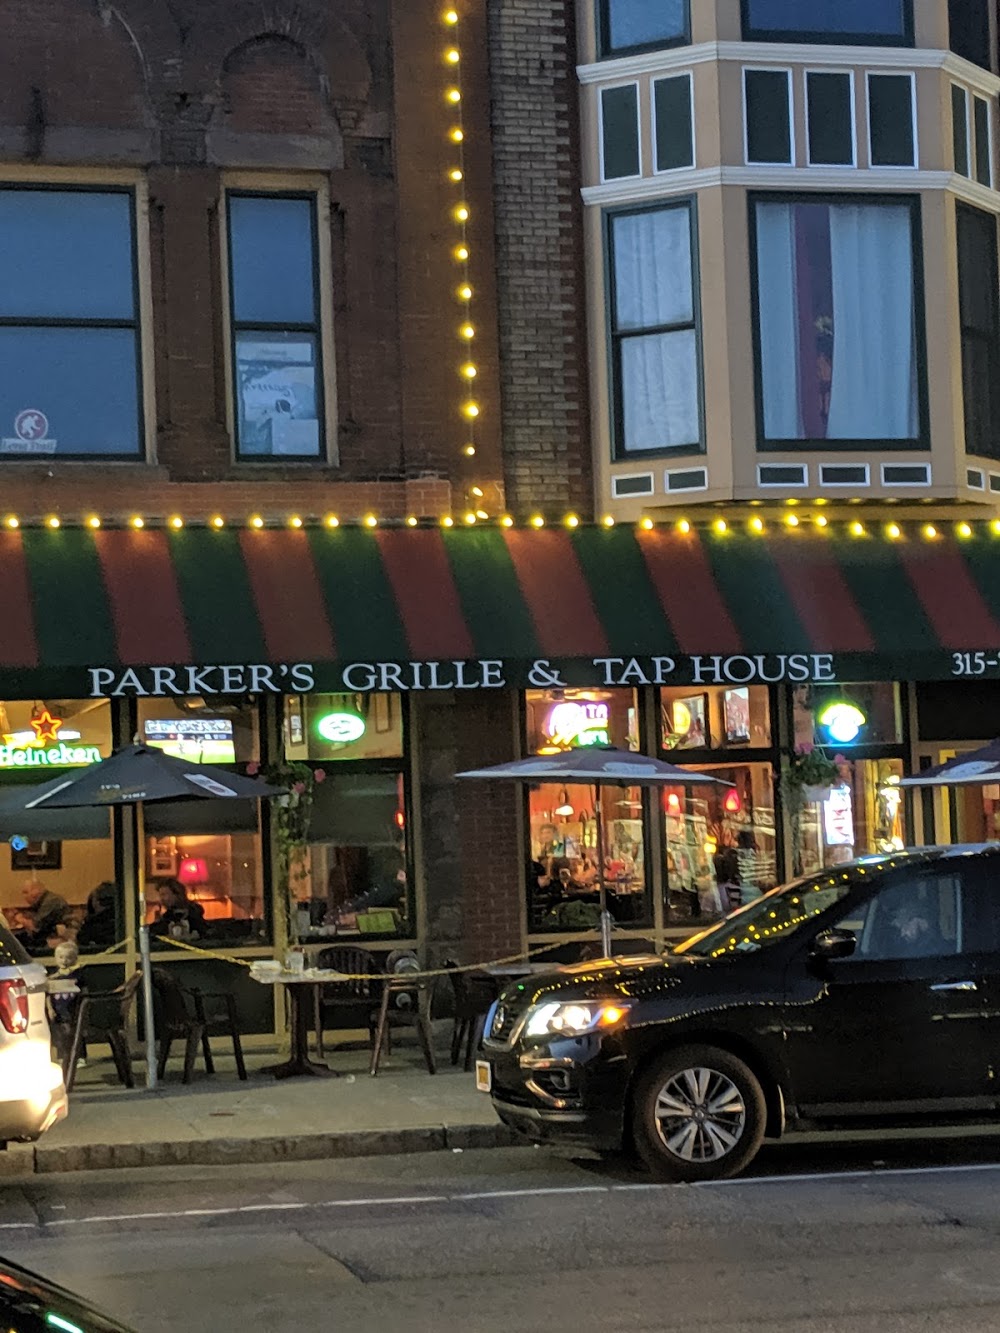 Parker’s Grille & Tap House